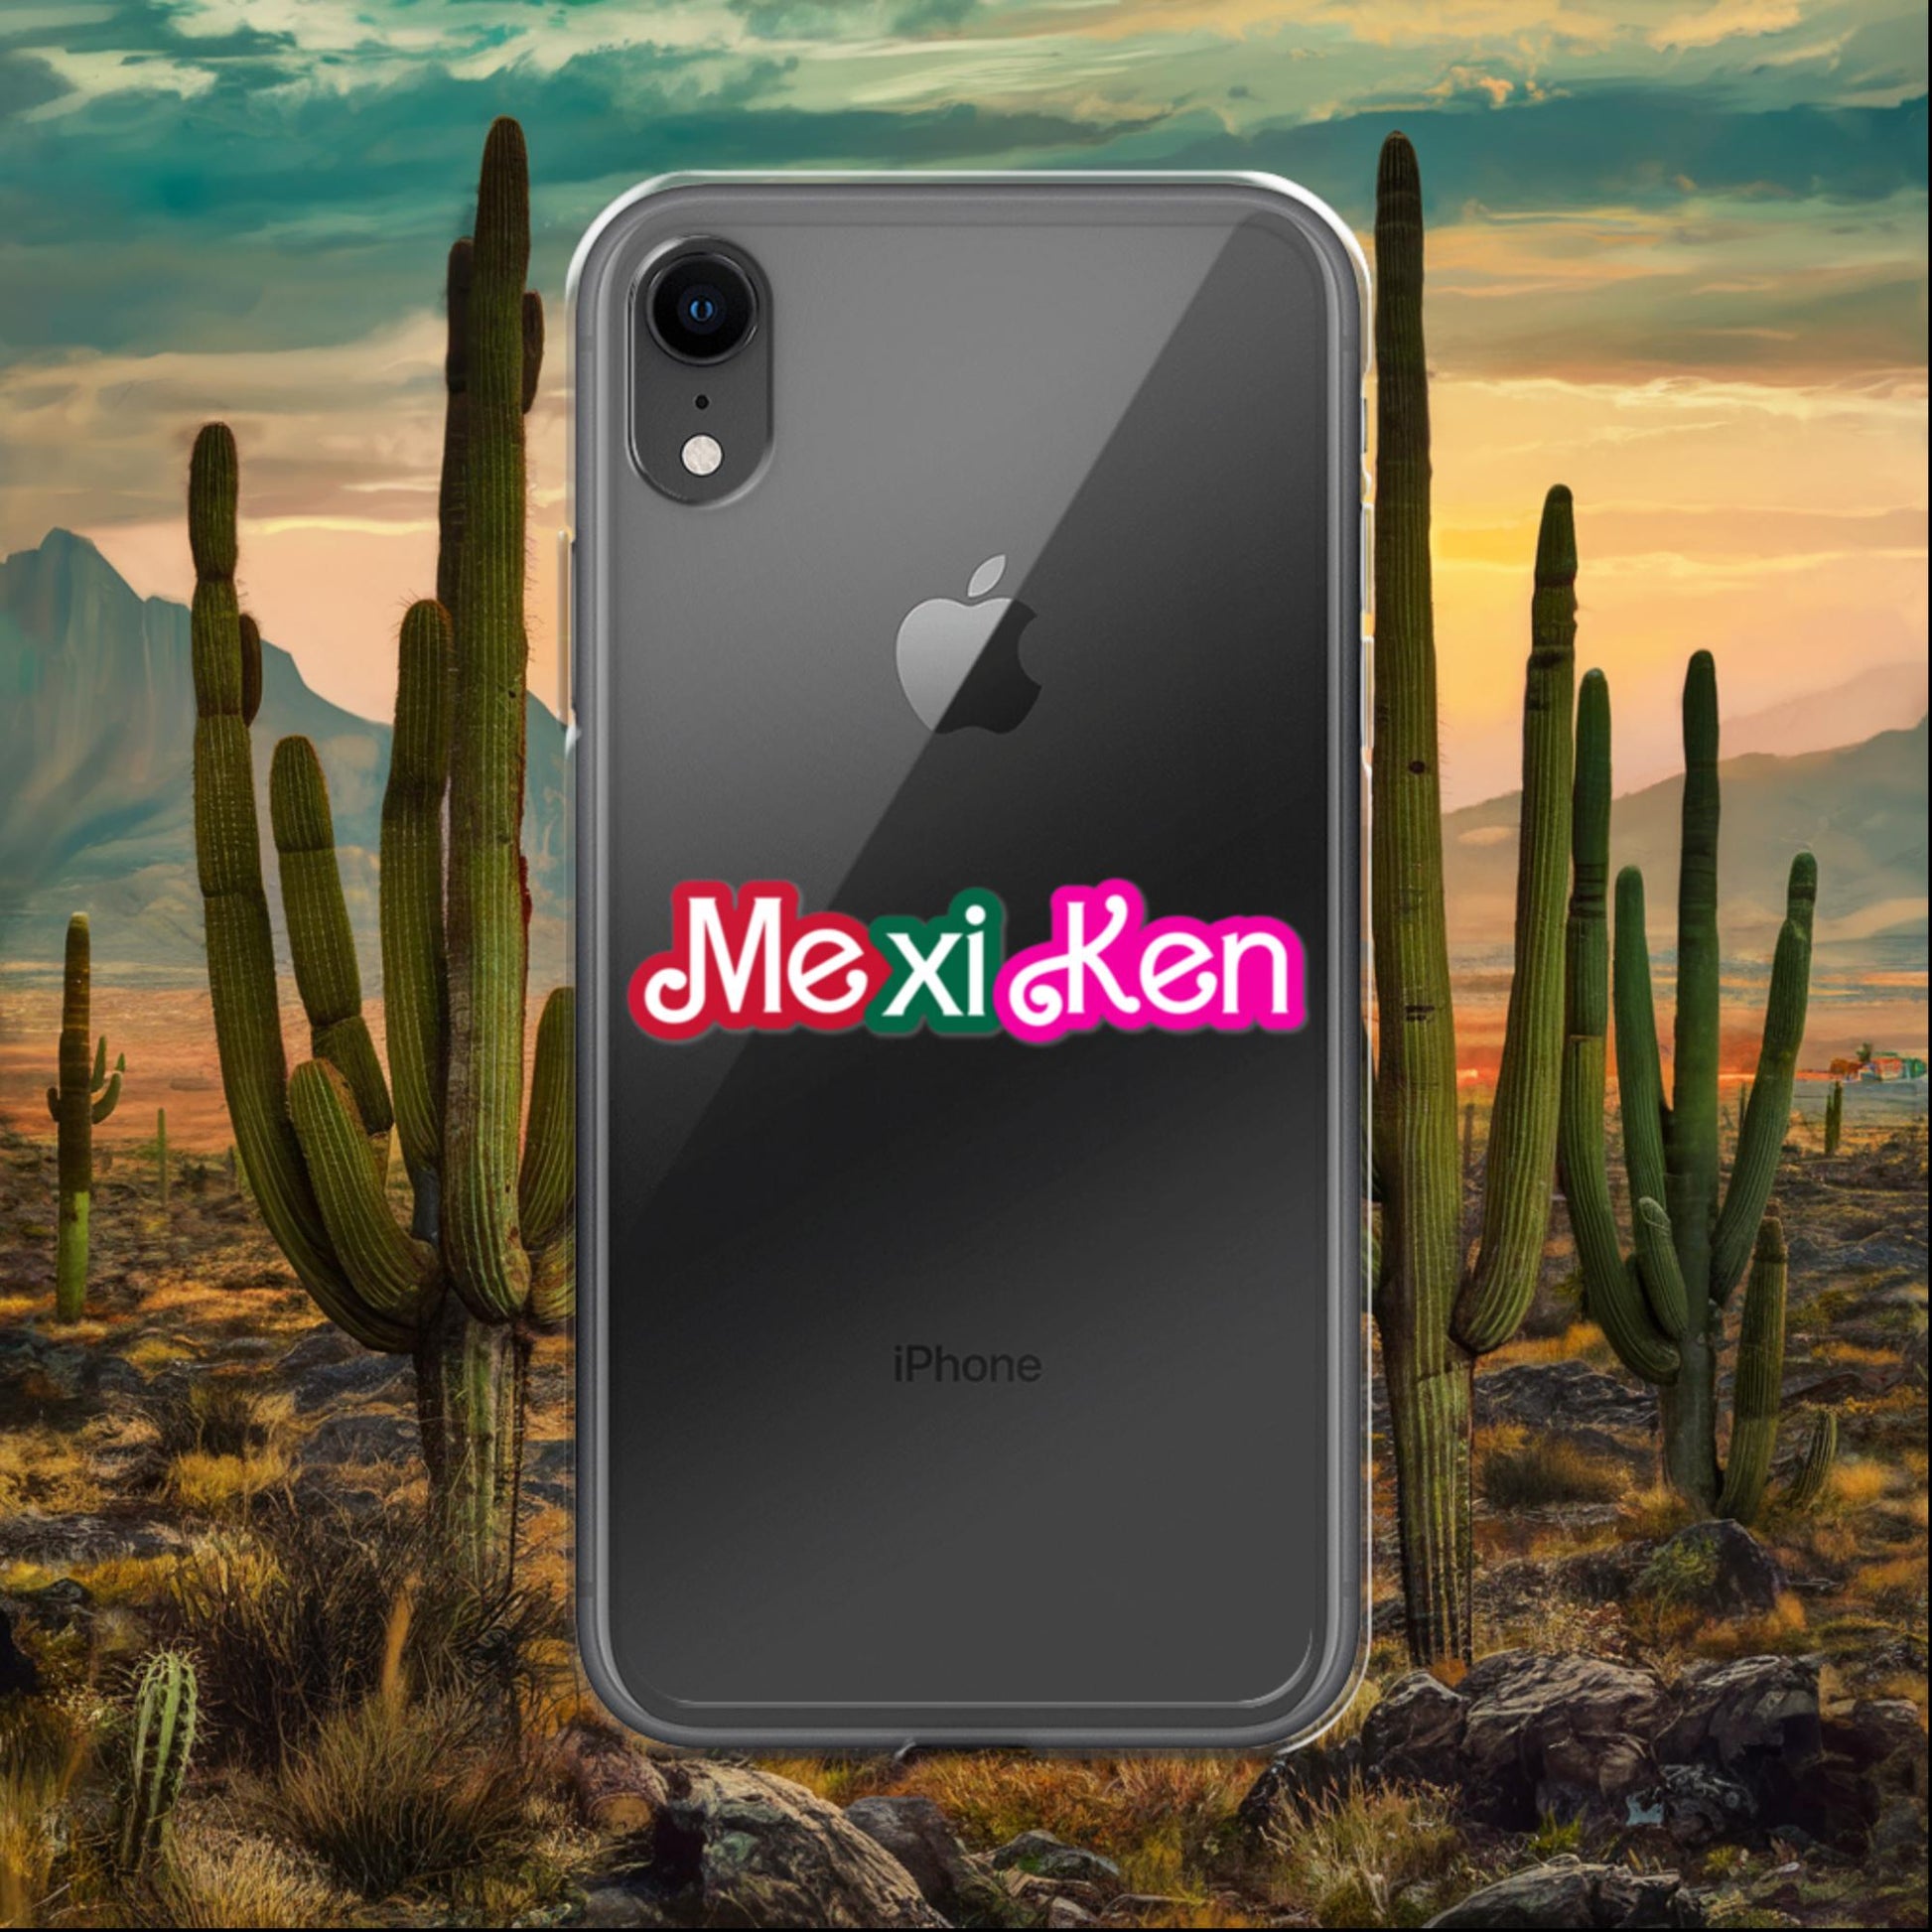 MexiKen Ken Barbie Mexico Mexican Mexicana Latino Latina Latinx Clear Case for iPhone Next Cult Brand